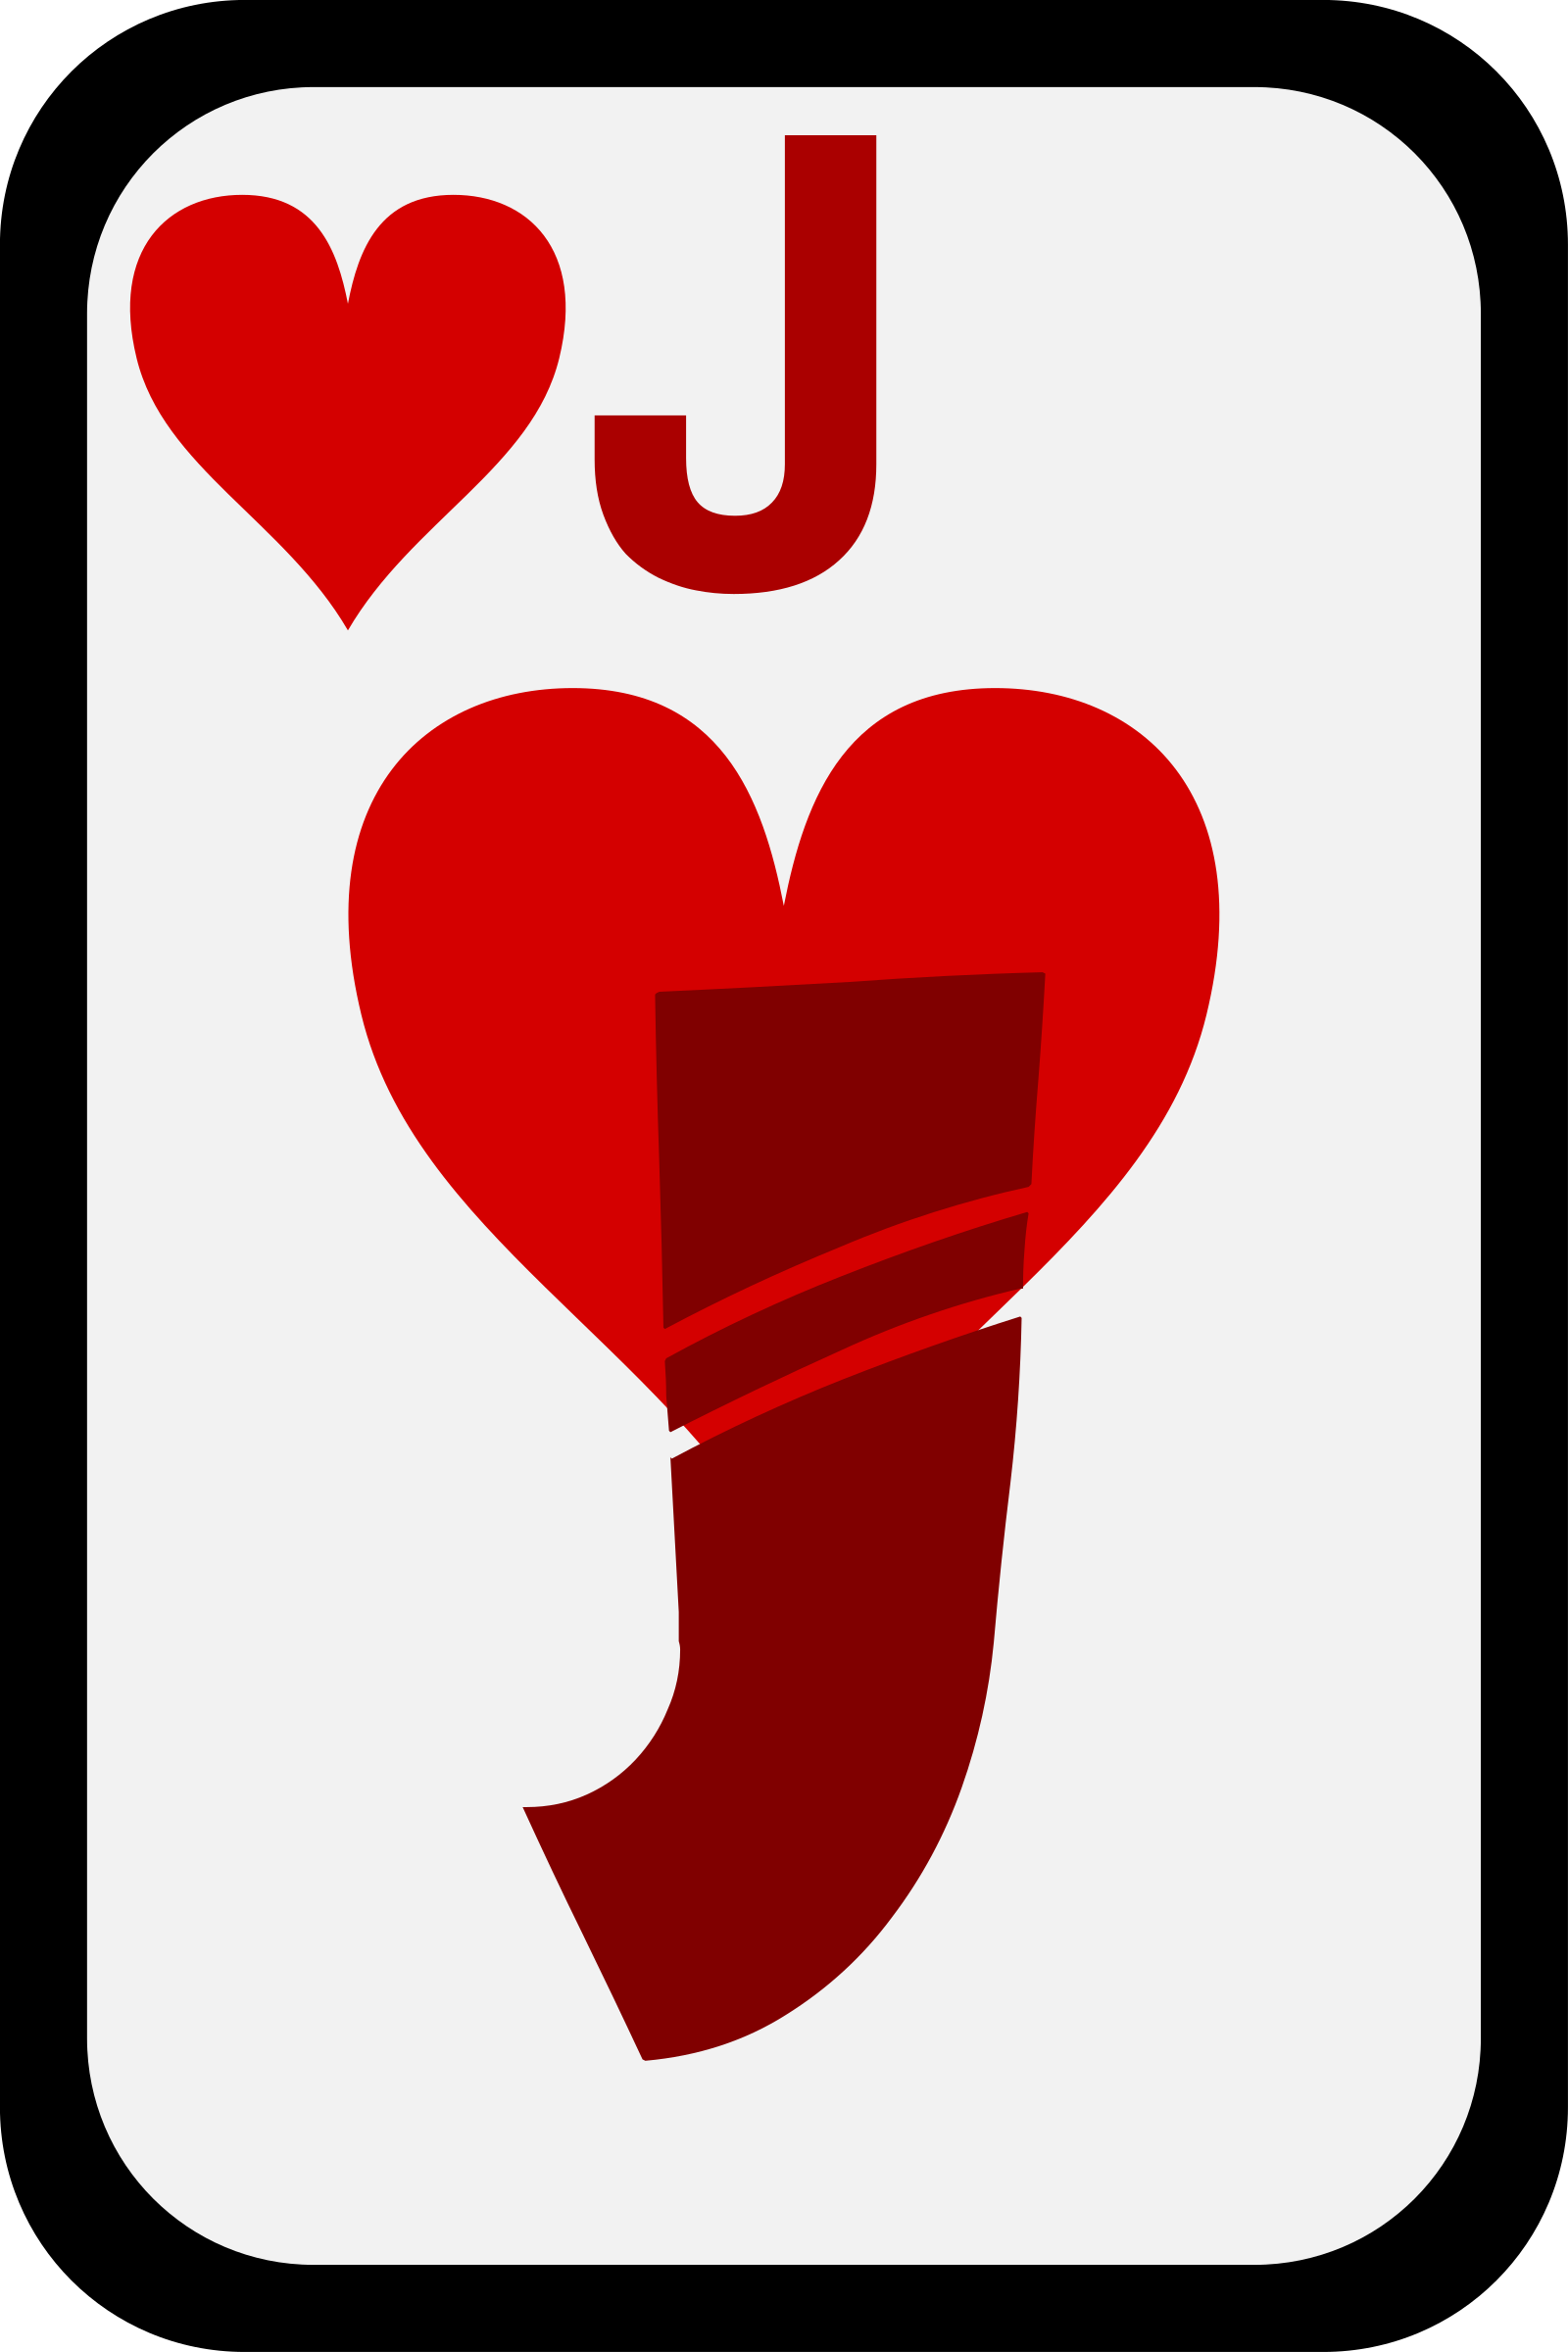 Jack of Hearts SVG Clip arts